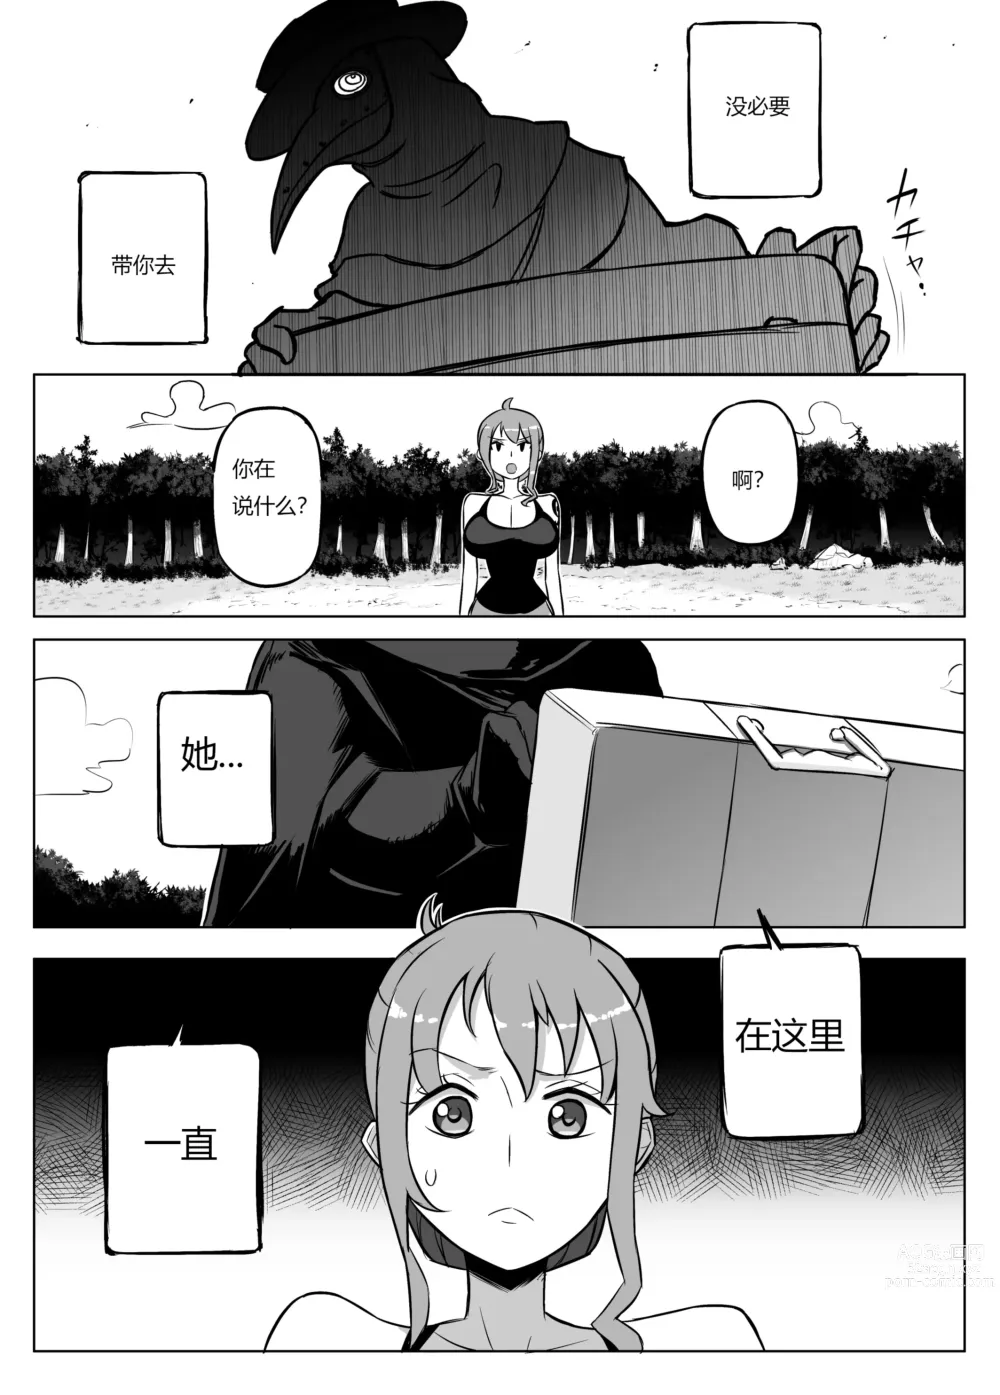 Page 6 of manga Trade